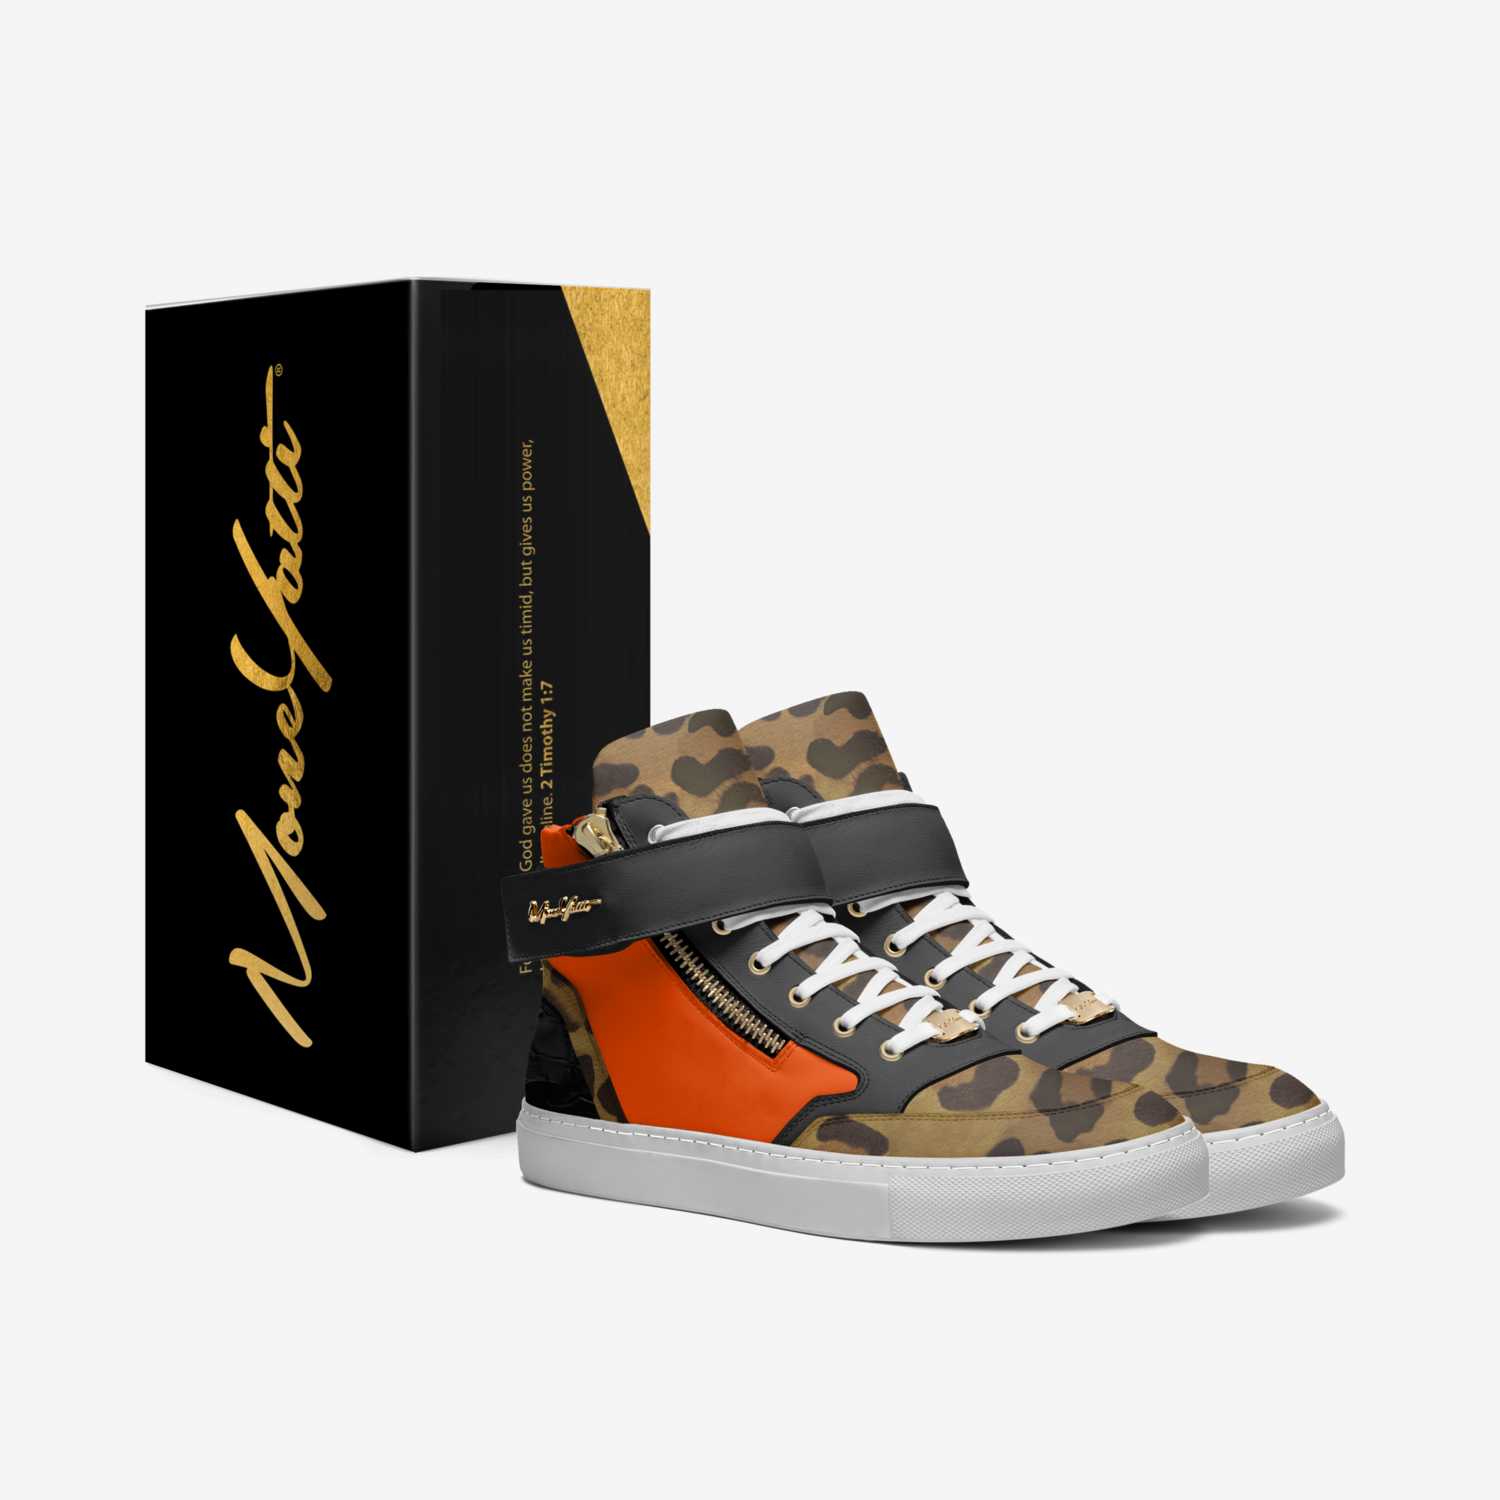 MONEYATTI CLS4W custom made in Italy shoes by Moneyatti Brand | Box view